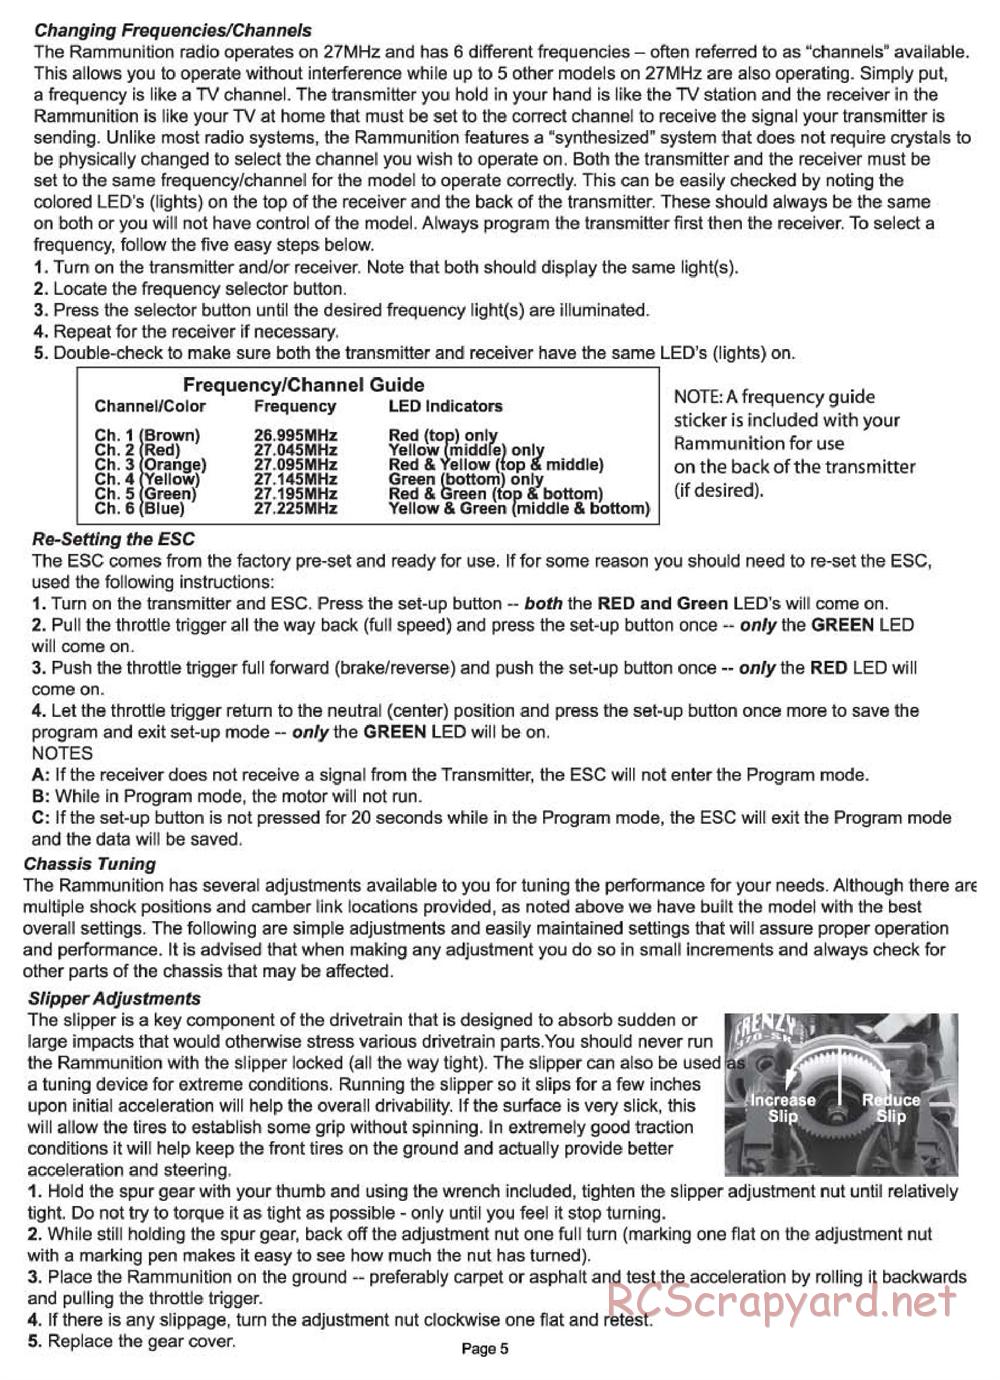 Team Losi - Rammunition - Manual - Page 5